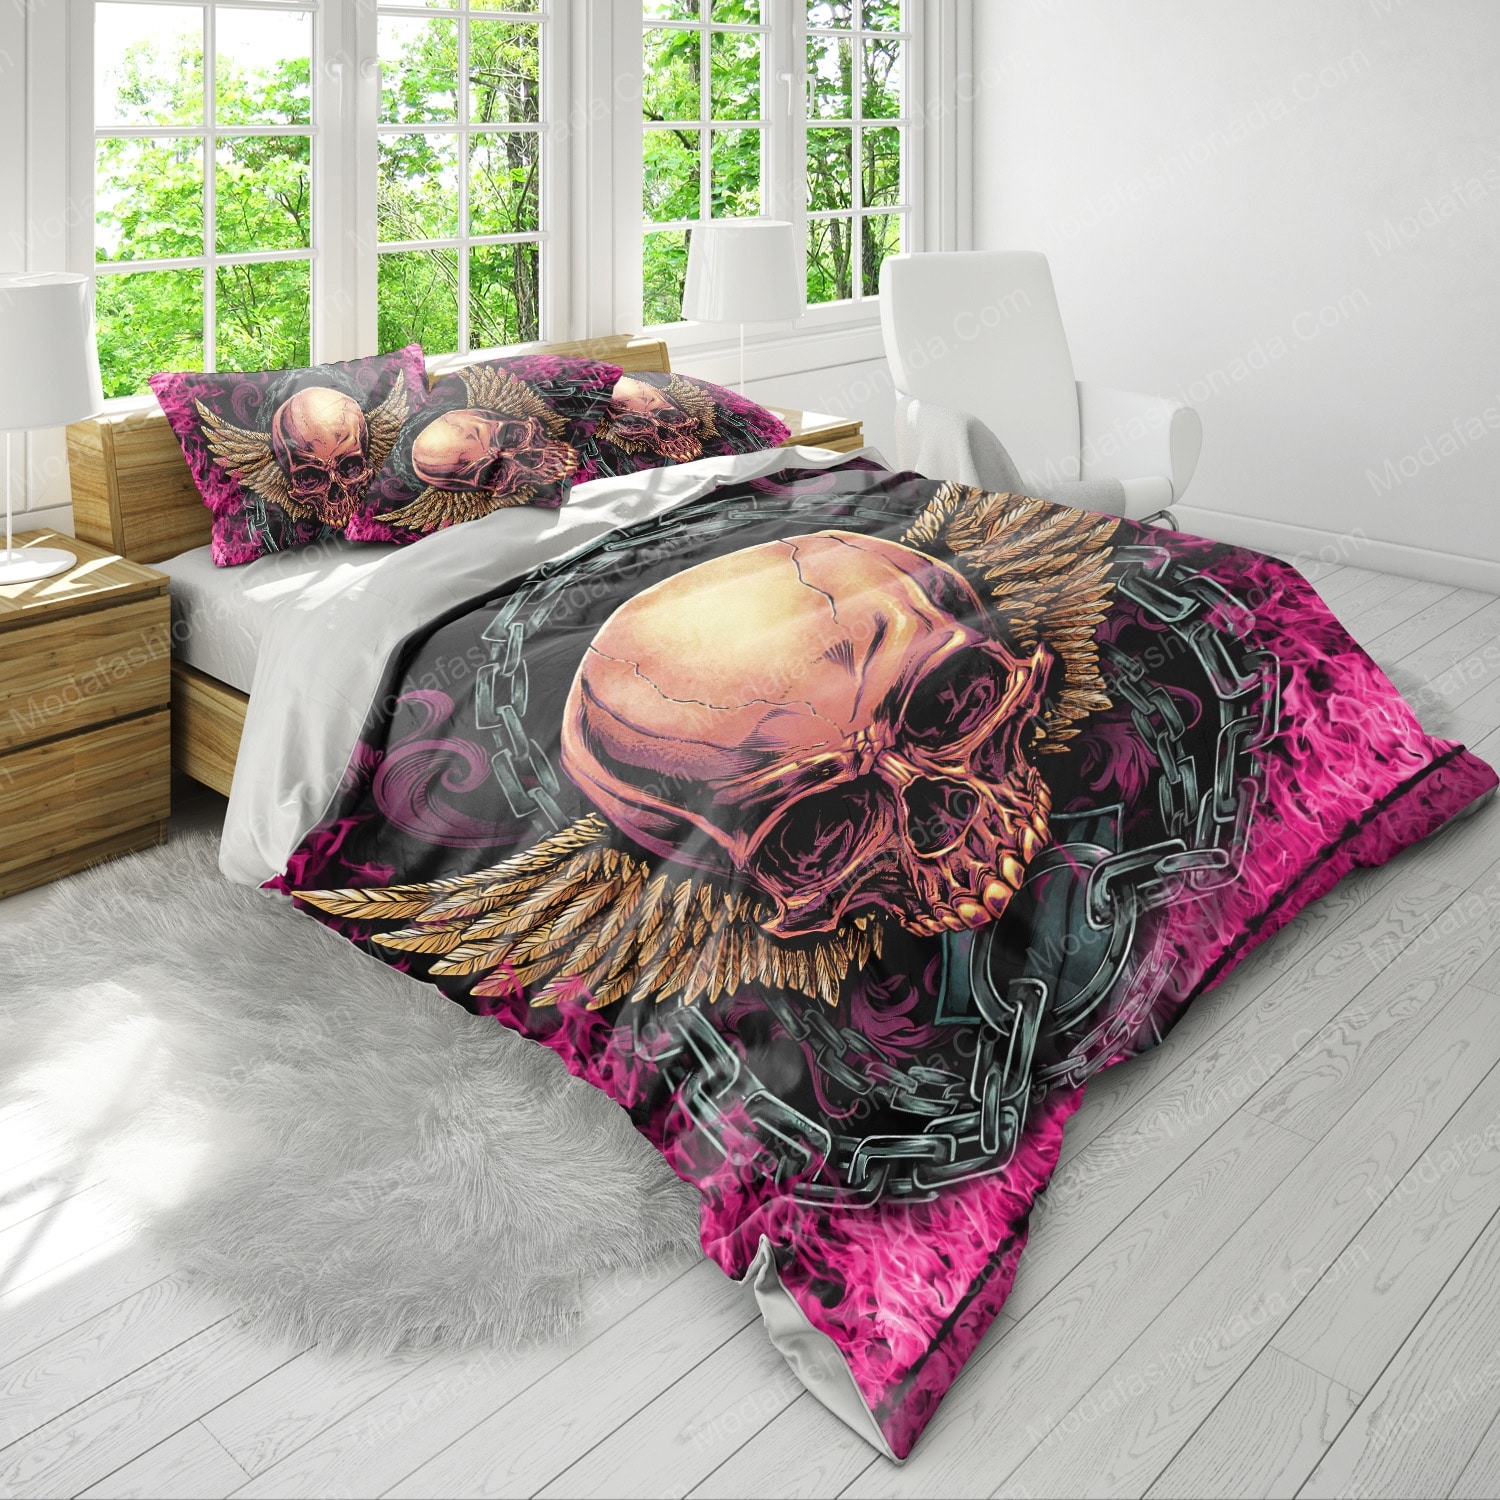 Buy Skull And Wings Halloween Bedding Sets Bed Sets, Bedroom Sets 